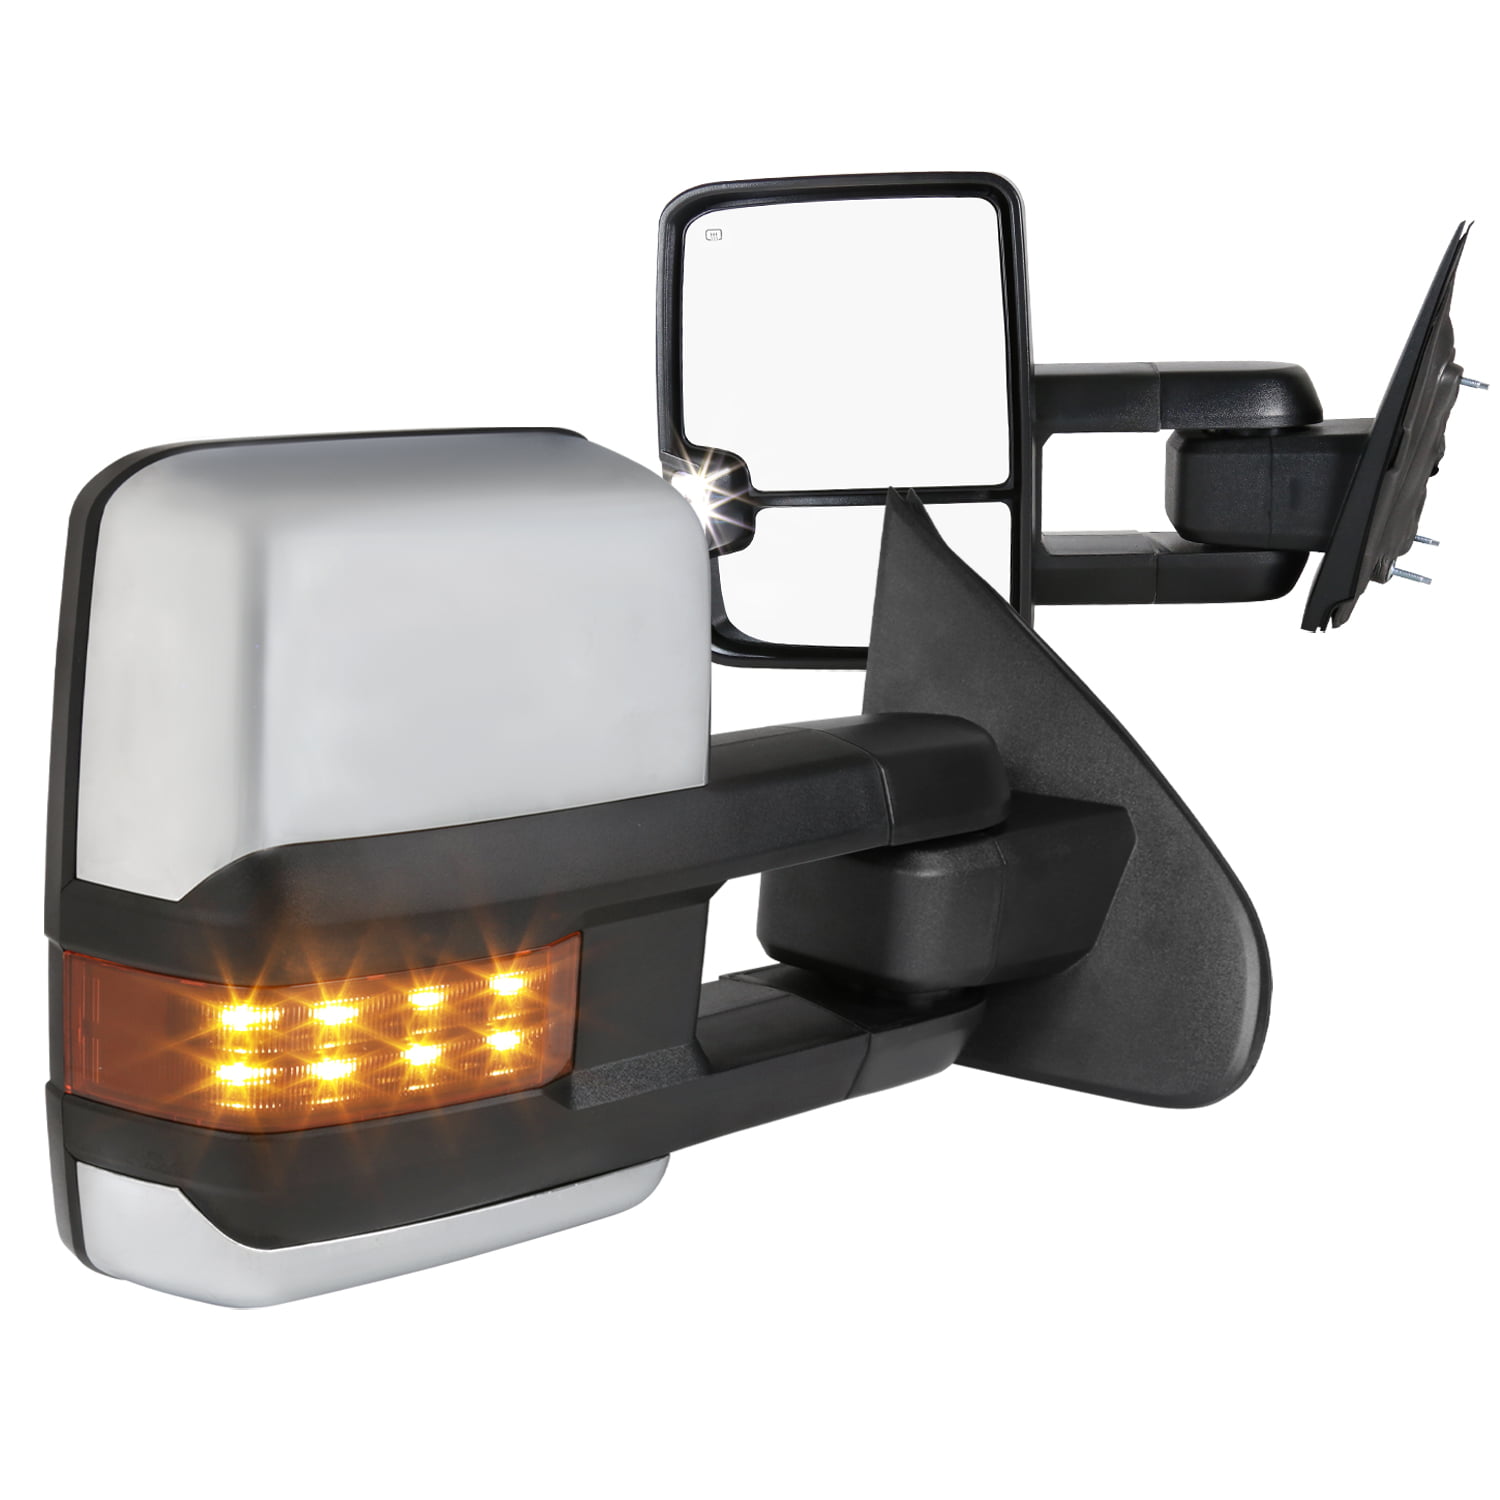 LED Passenger side WITH install kit 2013 Gmc YUKON WO AIR CURTAIN Door mount spotlight 6 inch -Chrome 